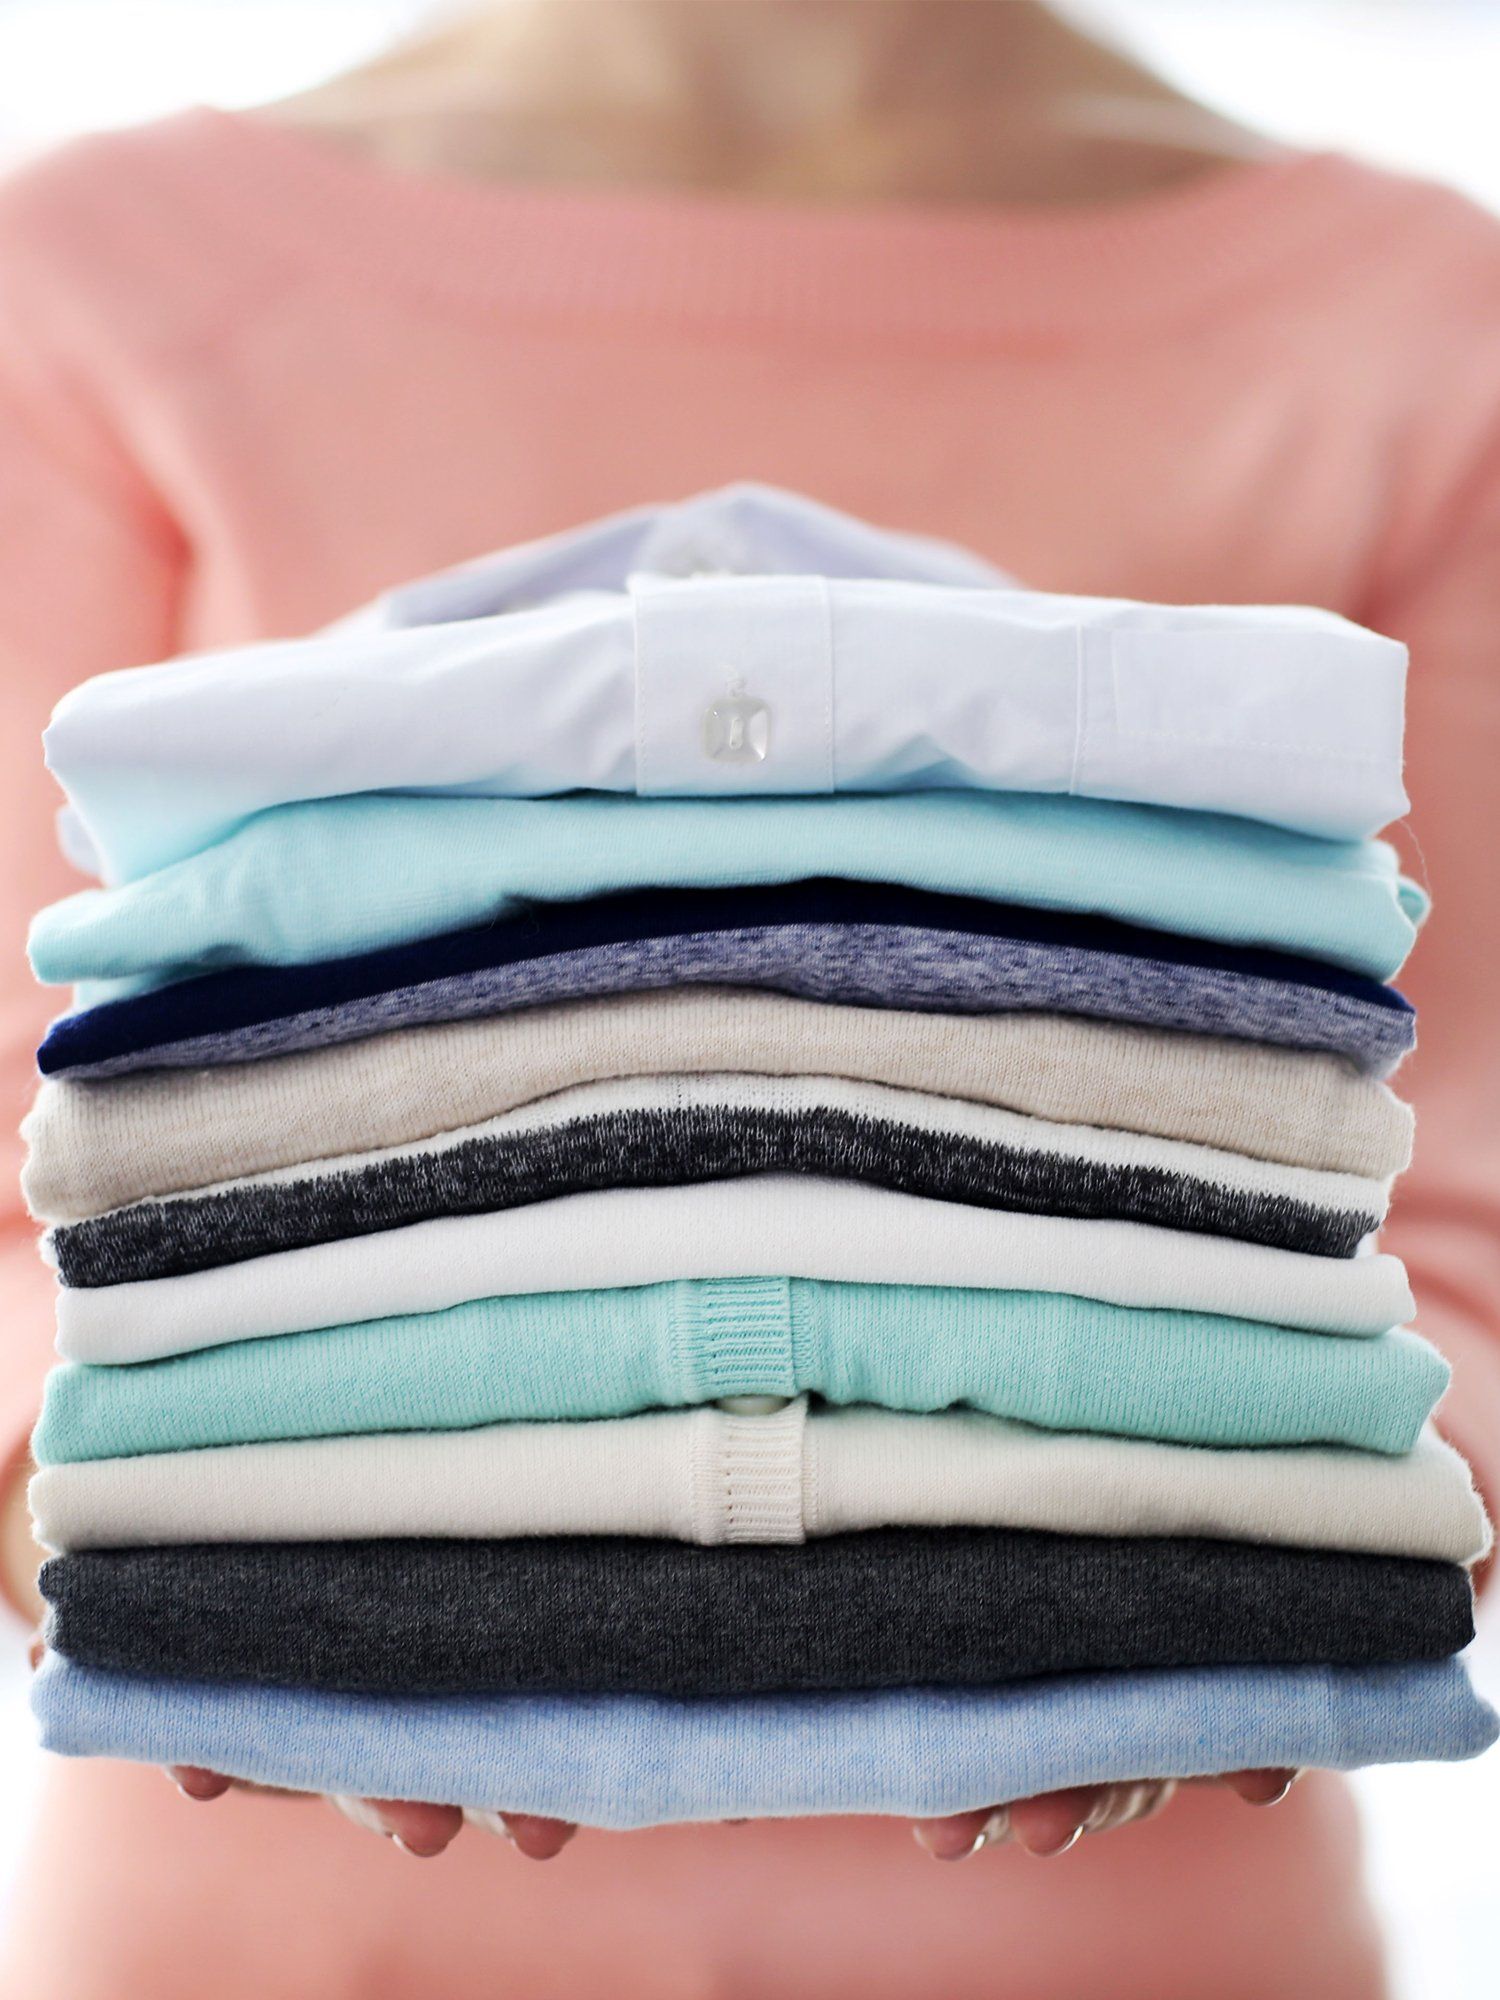 Laundry service wash dry fold